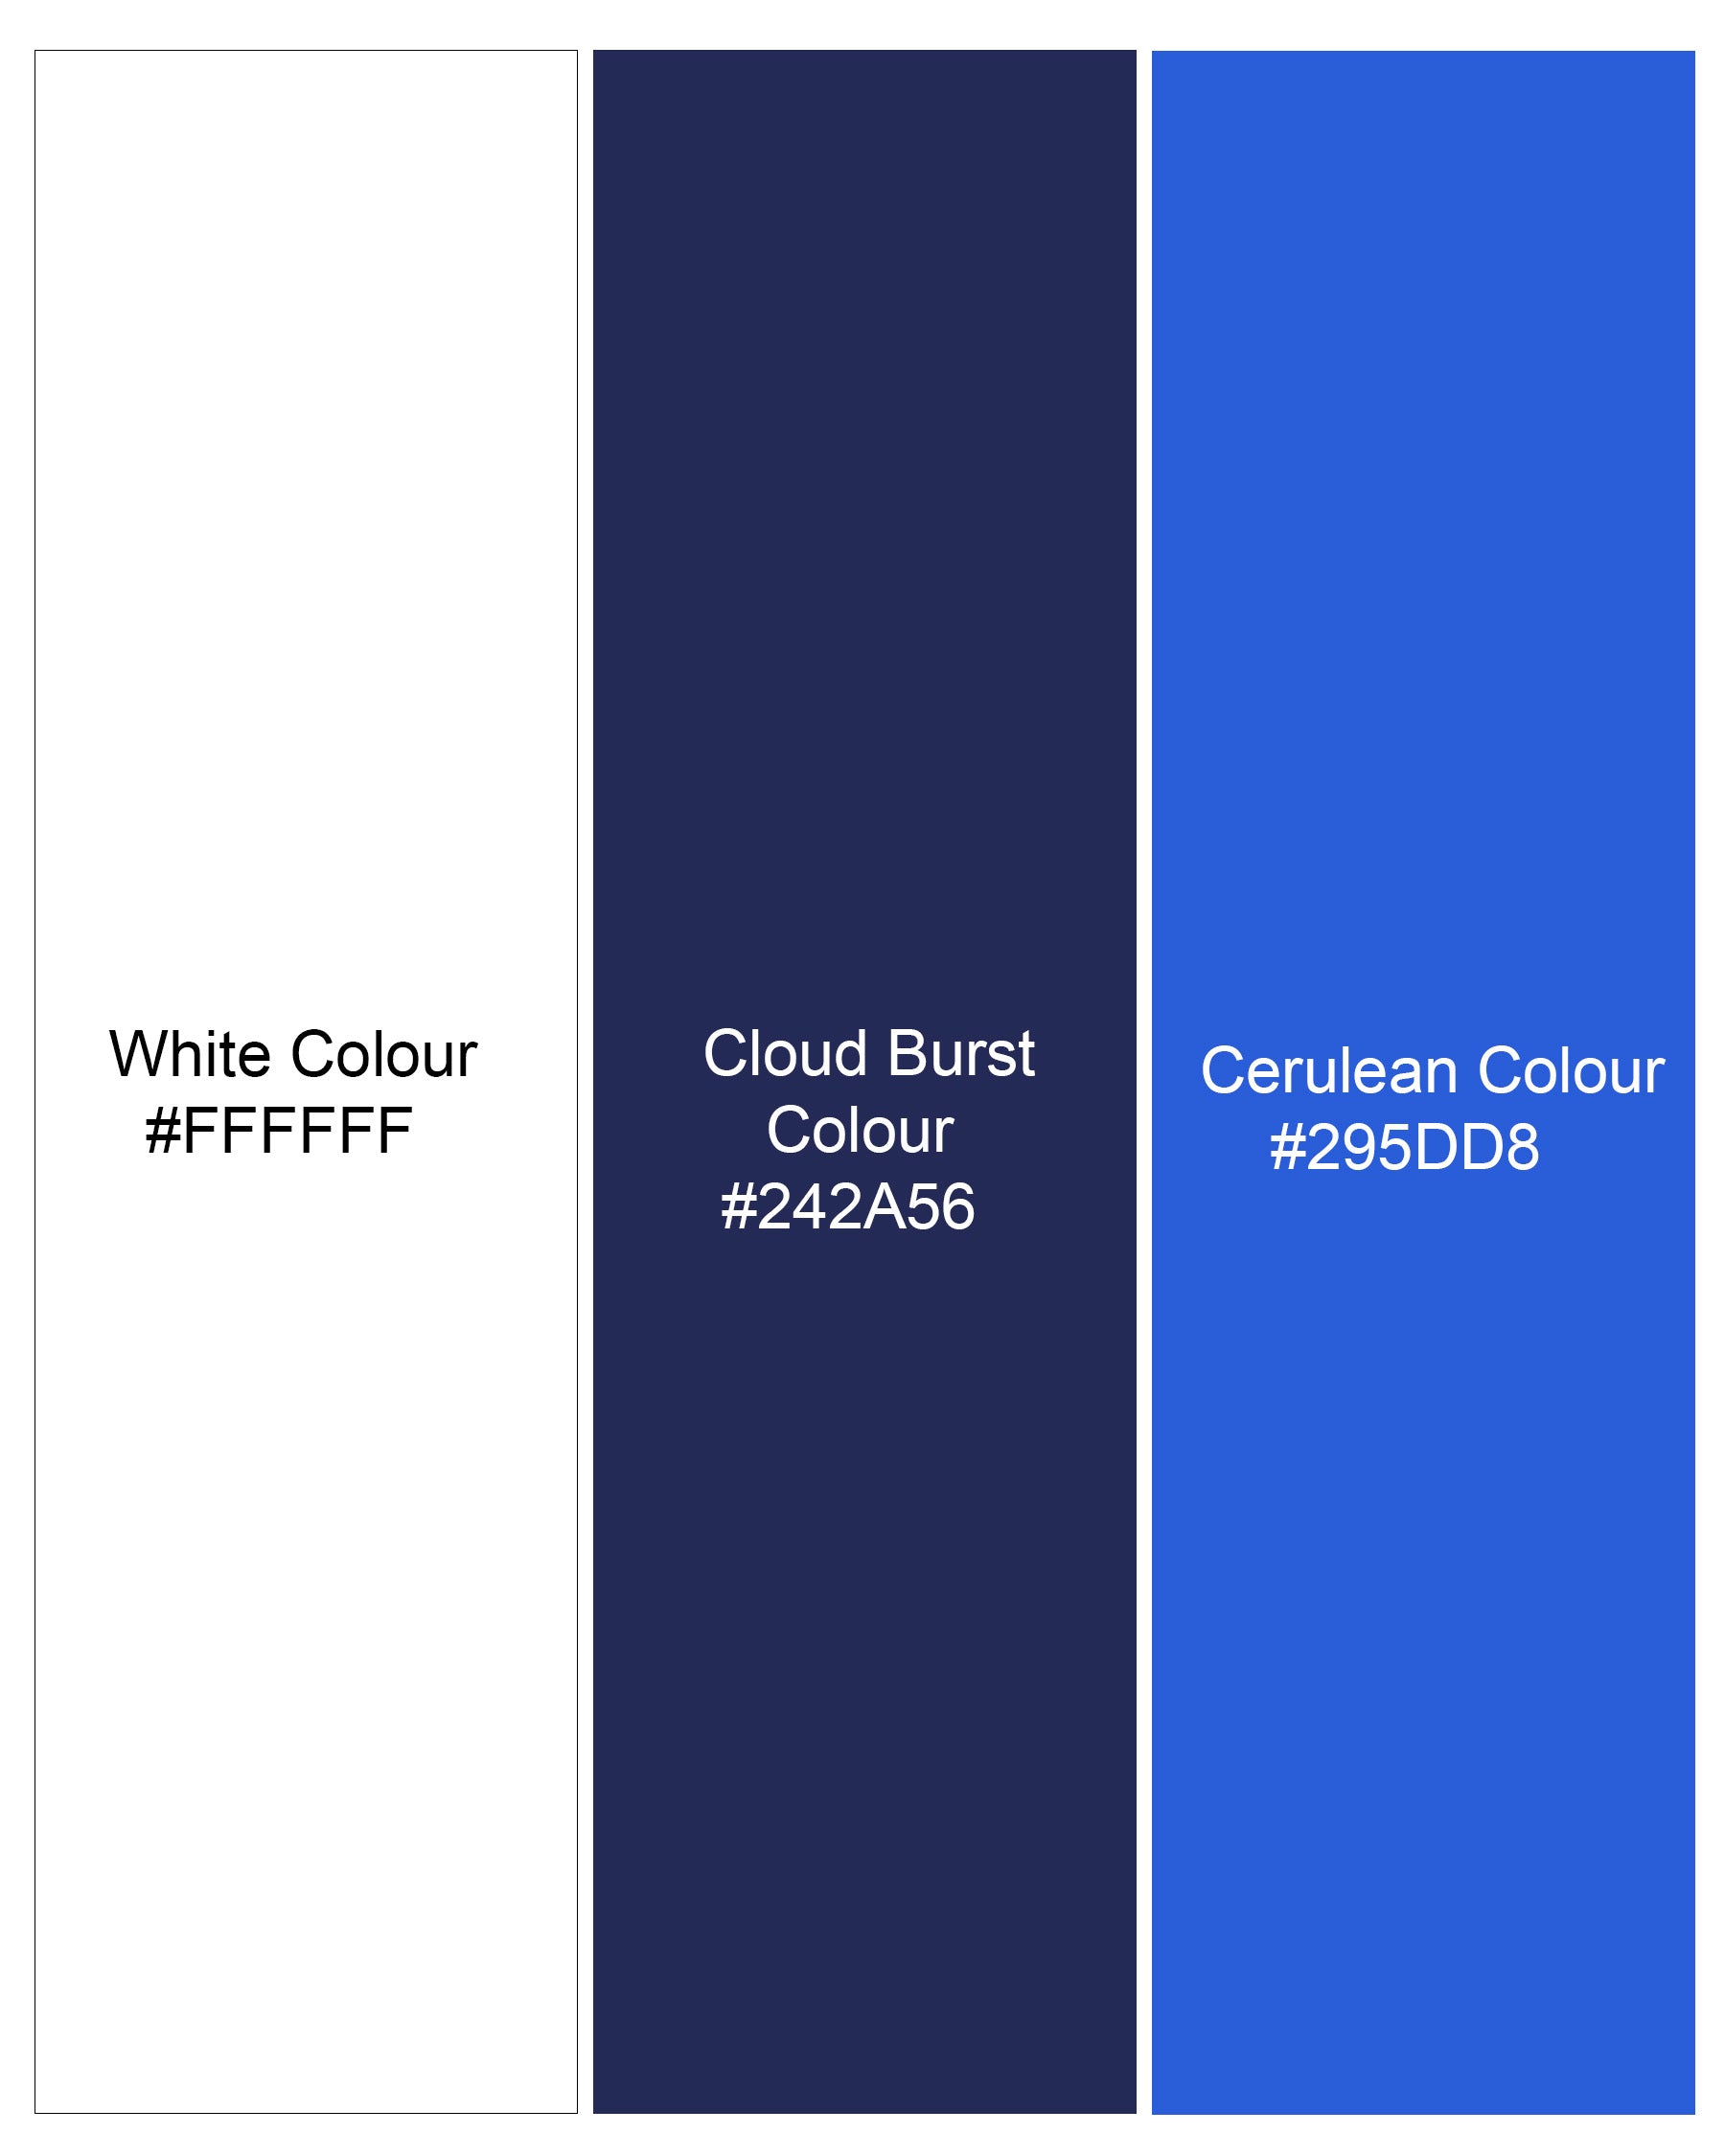 Bright White with CloudBurst Blue Abstract Printed Dobby Premium Giza Cotton Shirt 8248-BD-BLE-38,8248-BD-BLE-H-38,8248-BD-BLE-39,8248-BD-BLE-H-39,8248-BD-BLE-40,8248-BD-BLE-H-40,8248-BD-BLE-42,8248-BD-BLE-H-42,8248-BD-BLE-44,8248-BD-BLE-H-44,8248-BD-BLE-46,8248-BD-BLE-H-46,8248-BD-BLE-48,8248-BD-BLE-H-48,8248-BD-BLE-50,8248-BD-BLE-H-50,8248-BD-BLE-52,8248-BD-BLE-H-52